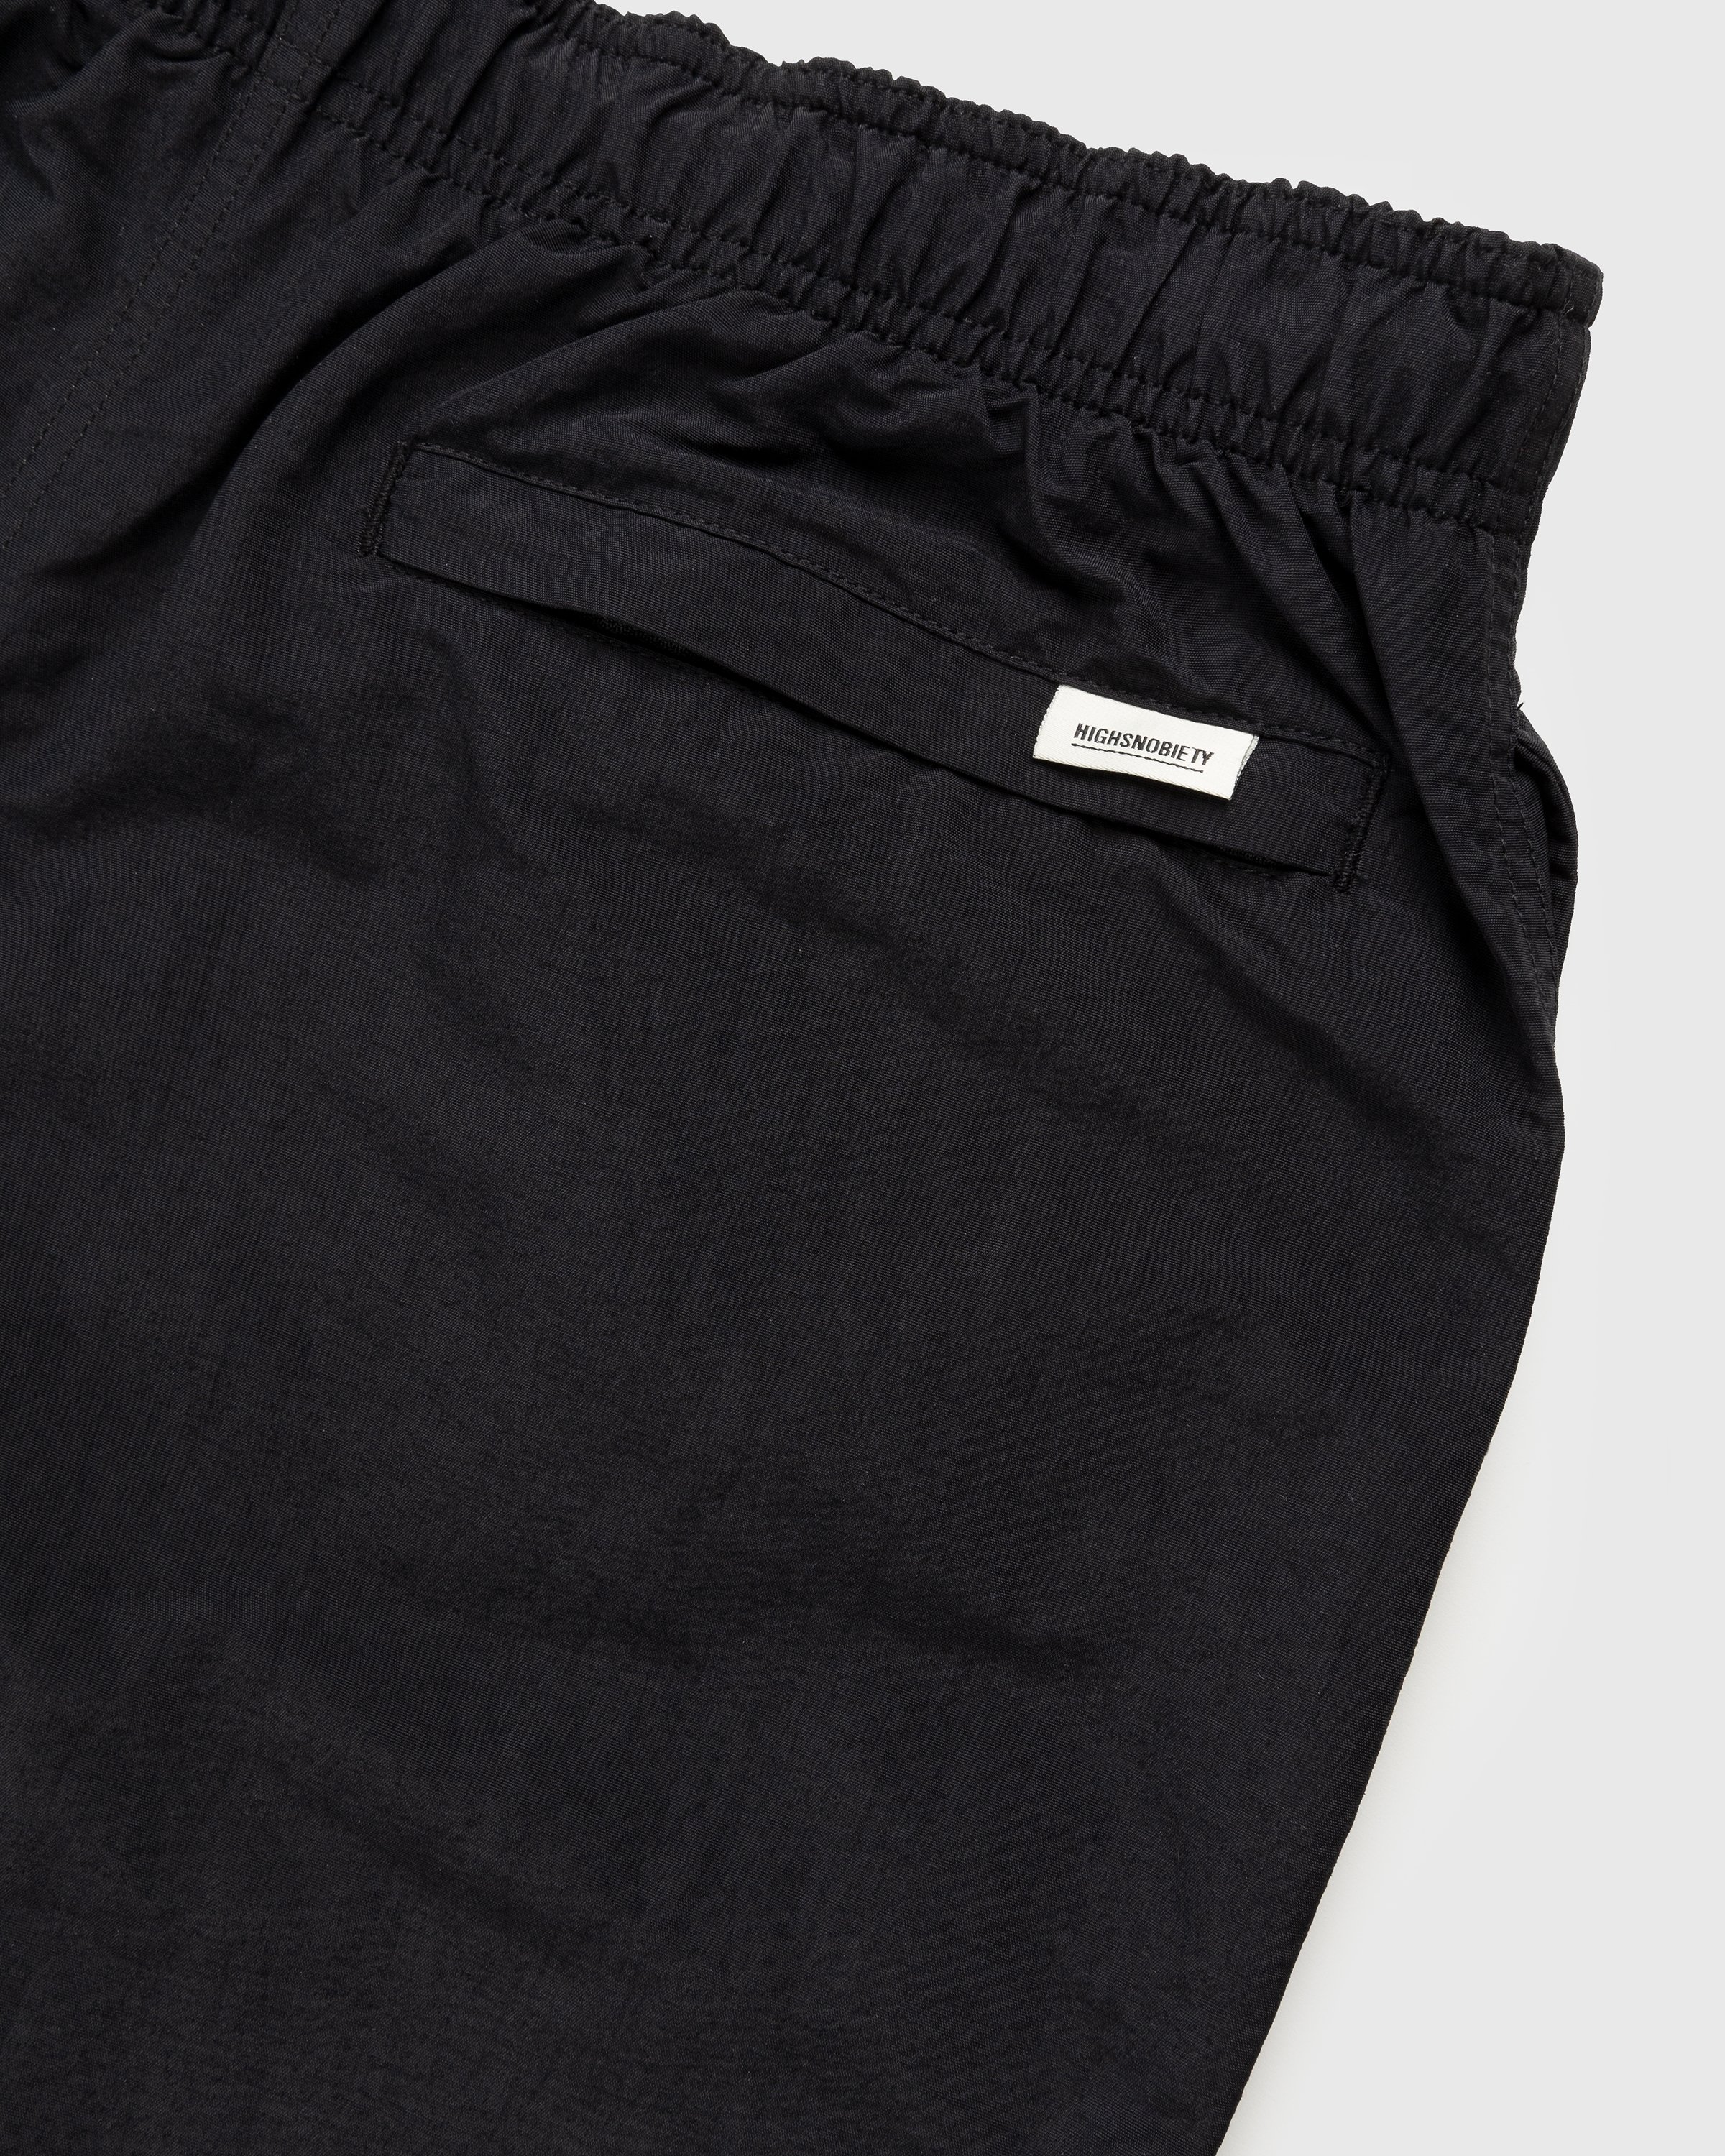 RUF x Highsnobiety - Water Shorts Black - Clothing - Black - Image 7